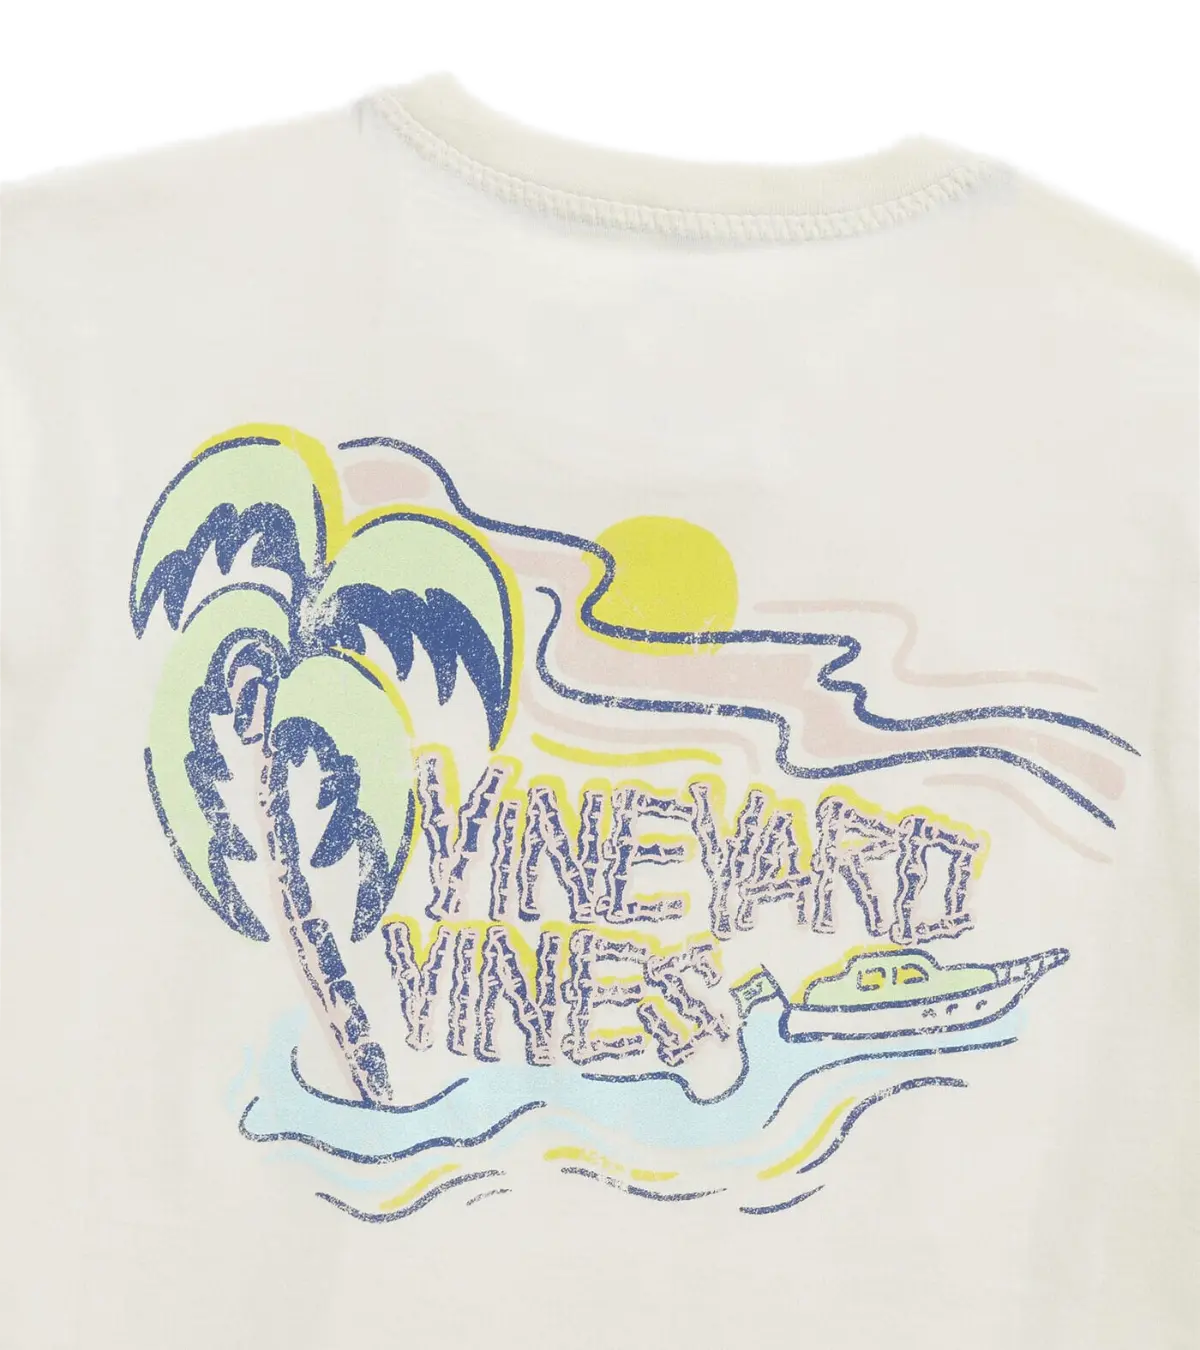 Vineyard Vines, Men's Bamboo Vines Short-Sleeve Dunes Tee (Pina Colada Heather White)